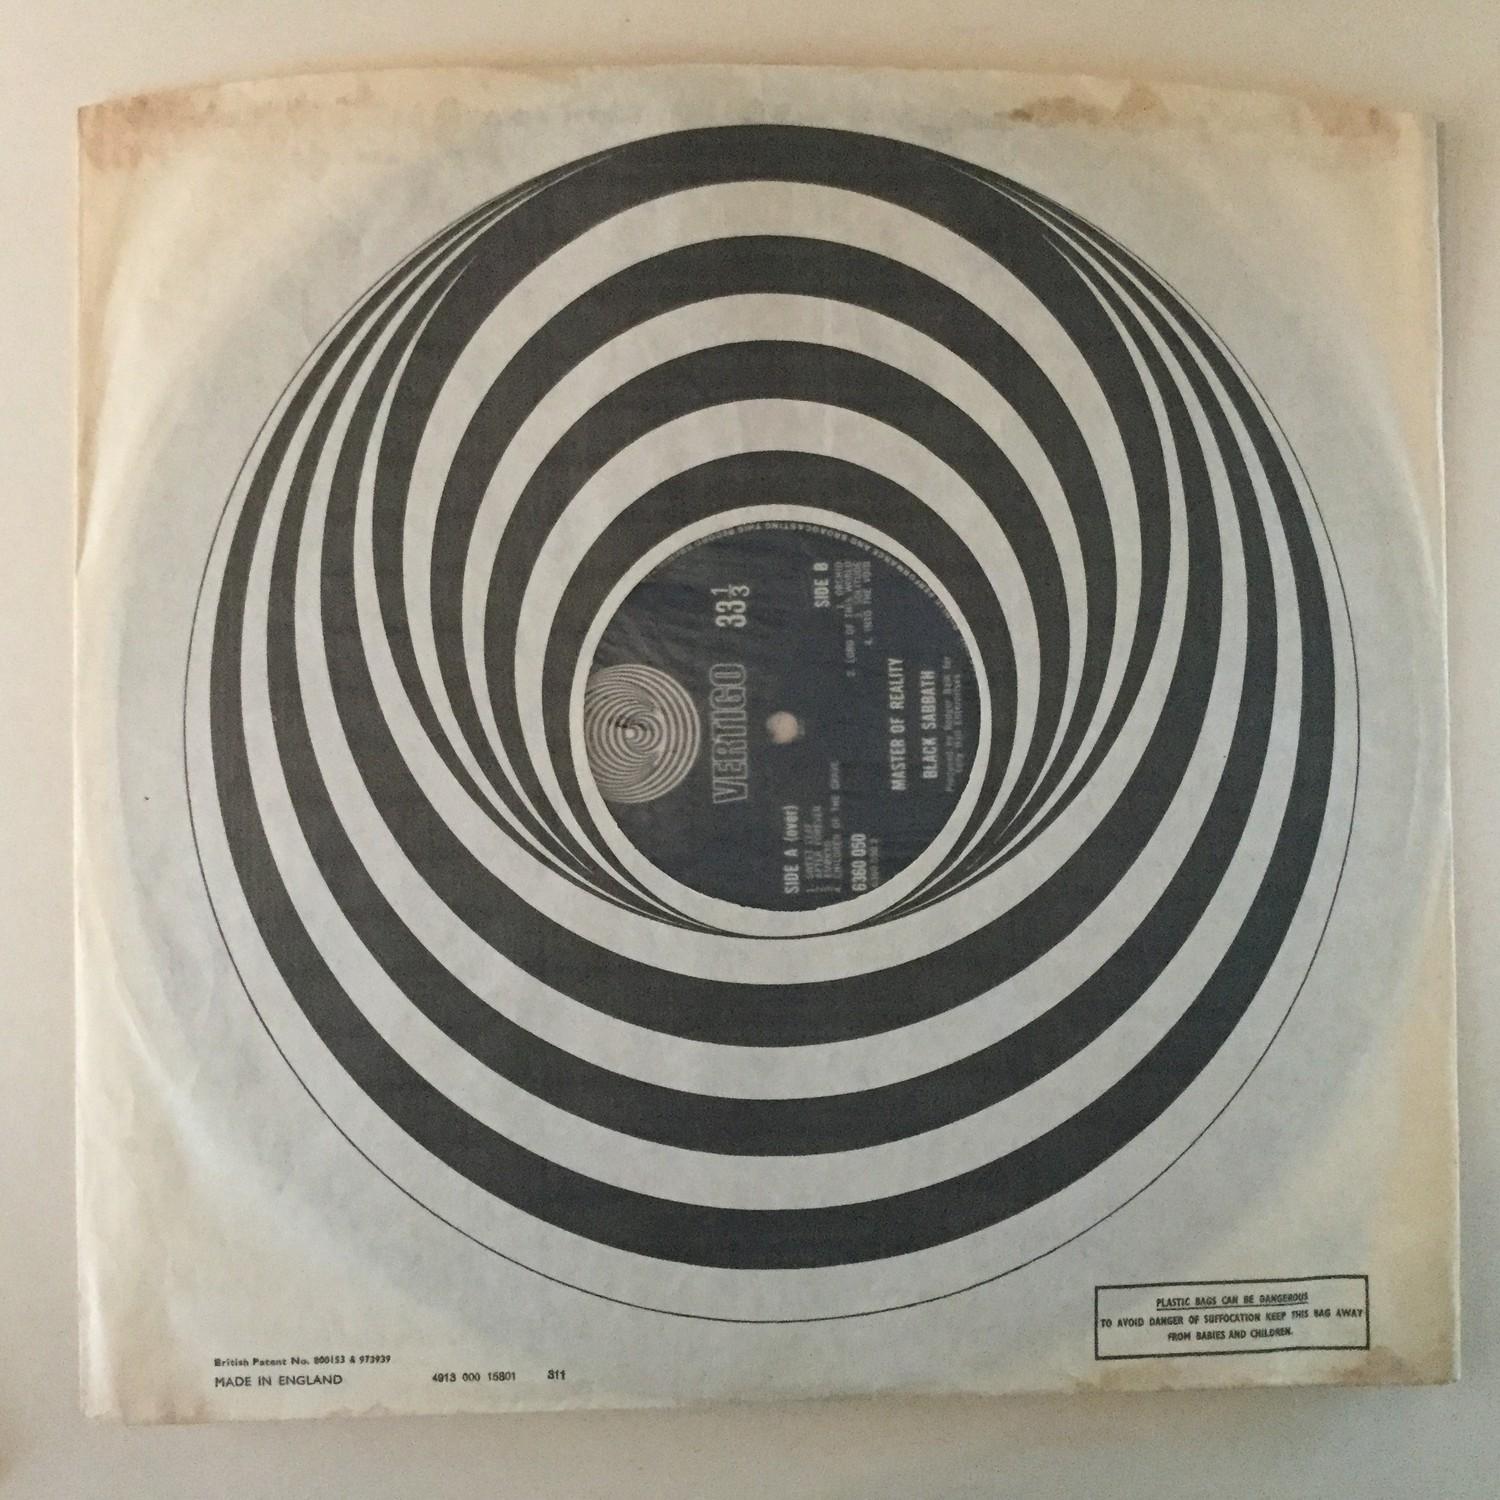 BLACK SABBATH 'MASTER OF REALITY' 33 RPM - LP. Vinyl Album on Vertigo Swirl 6360 050. Album / Box - Image 3 of 3